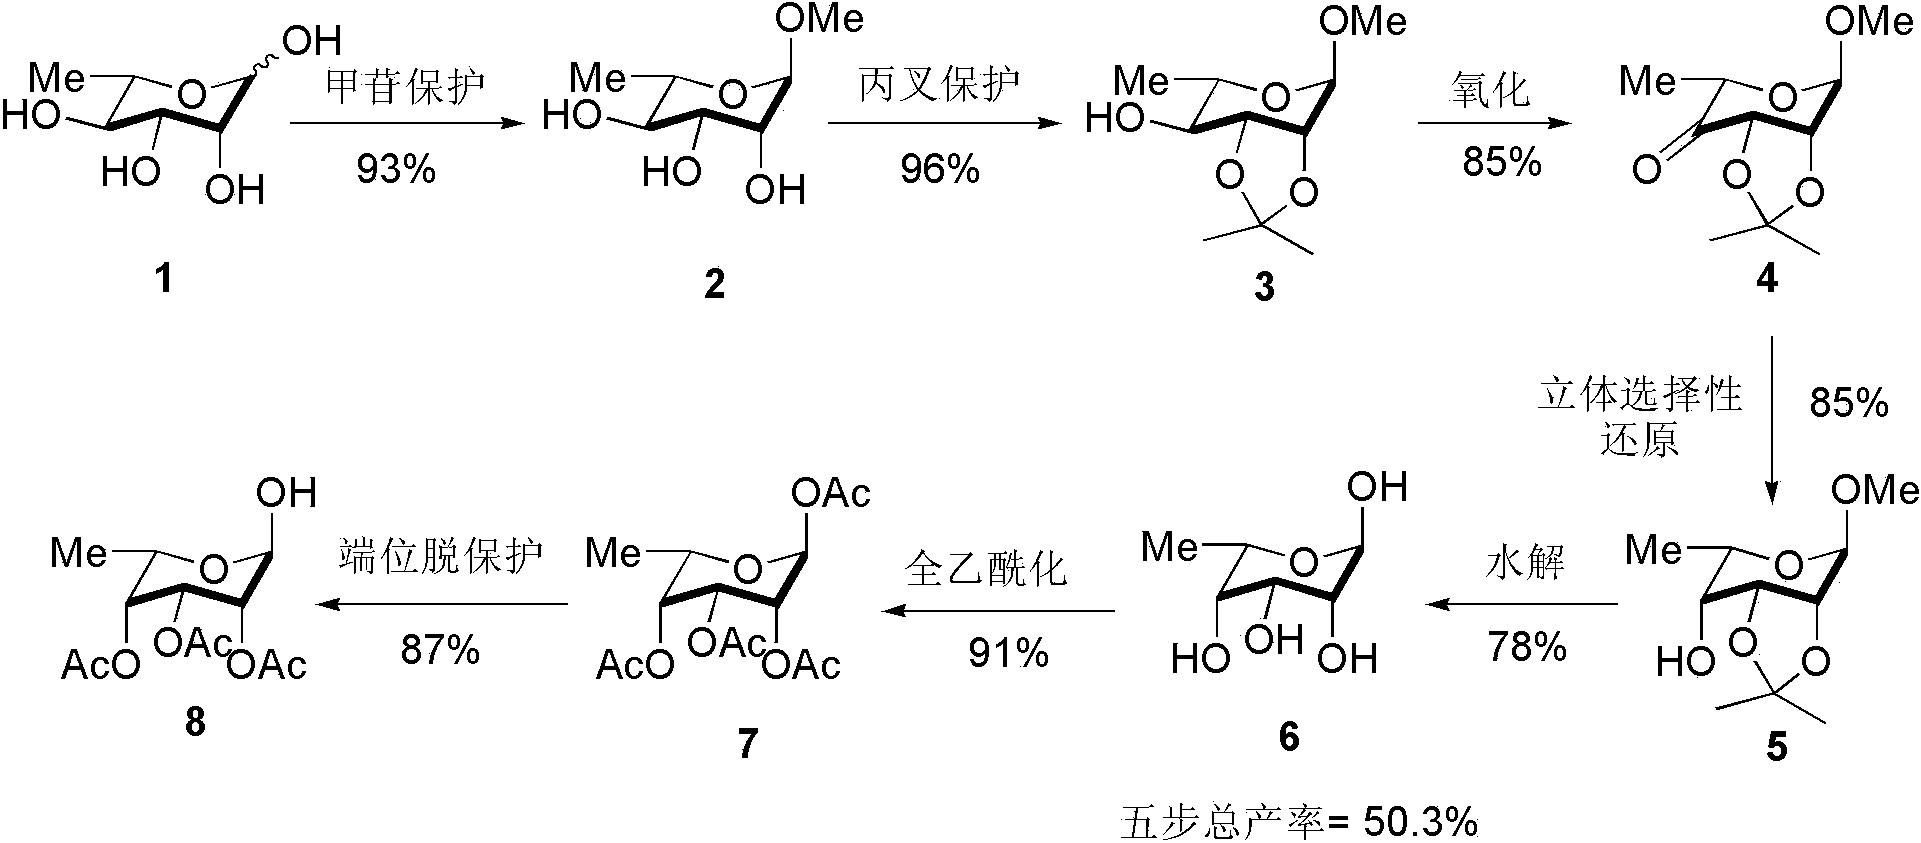 Method of preparing 6-deoxy-L-talose